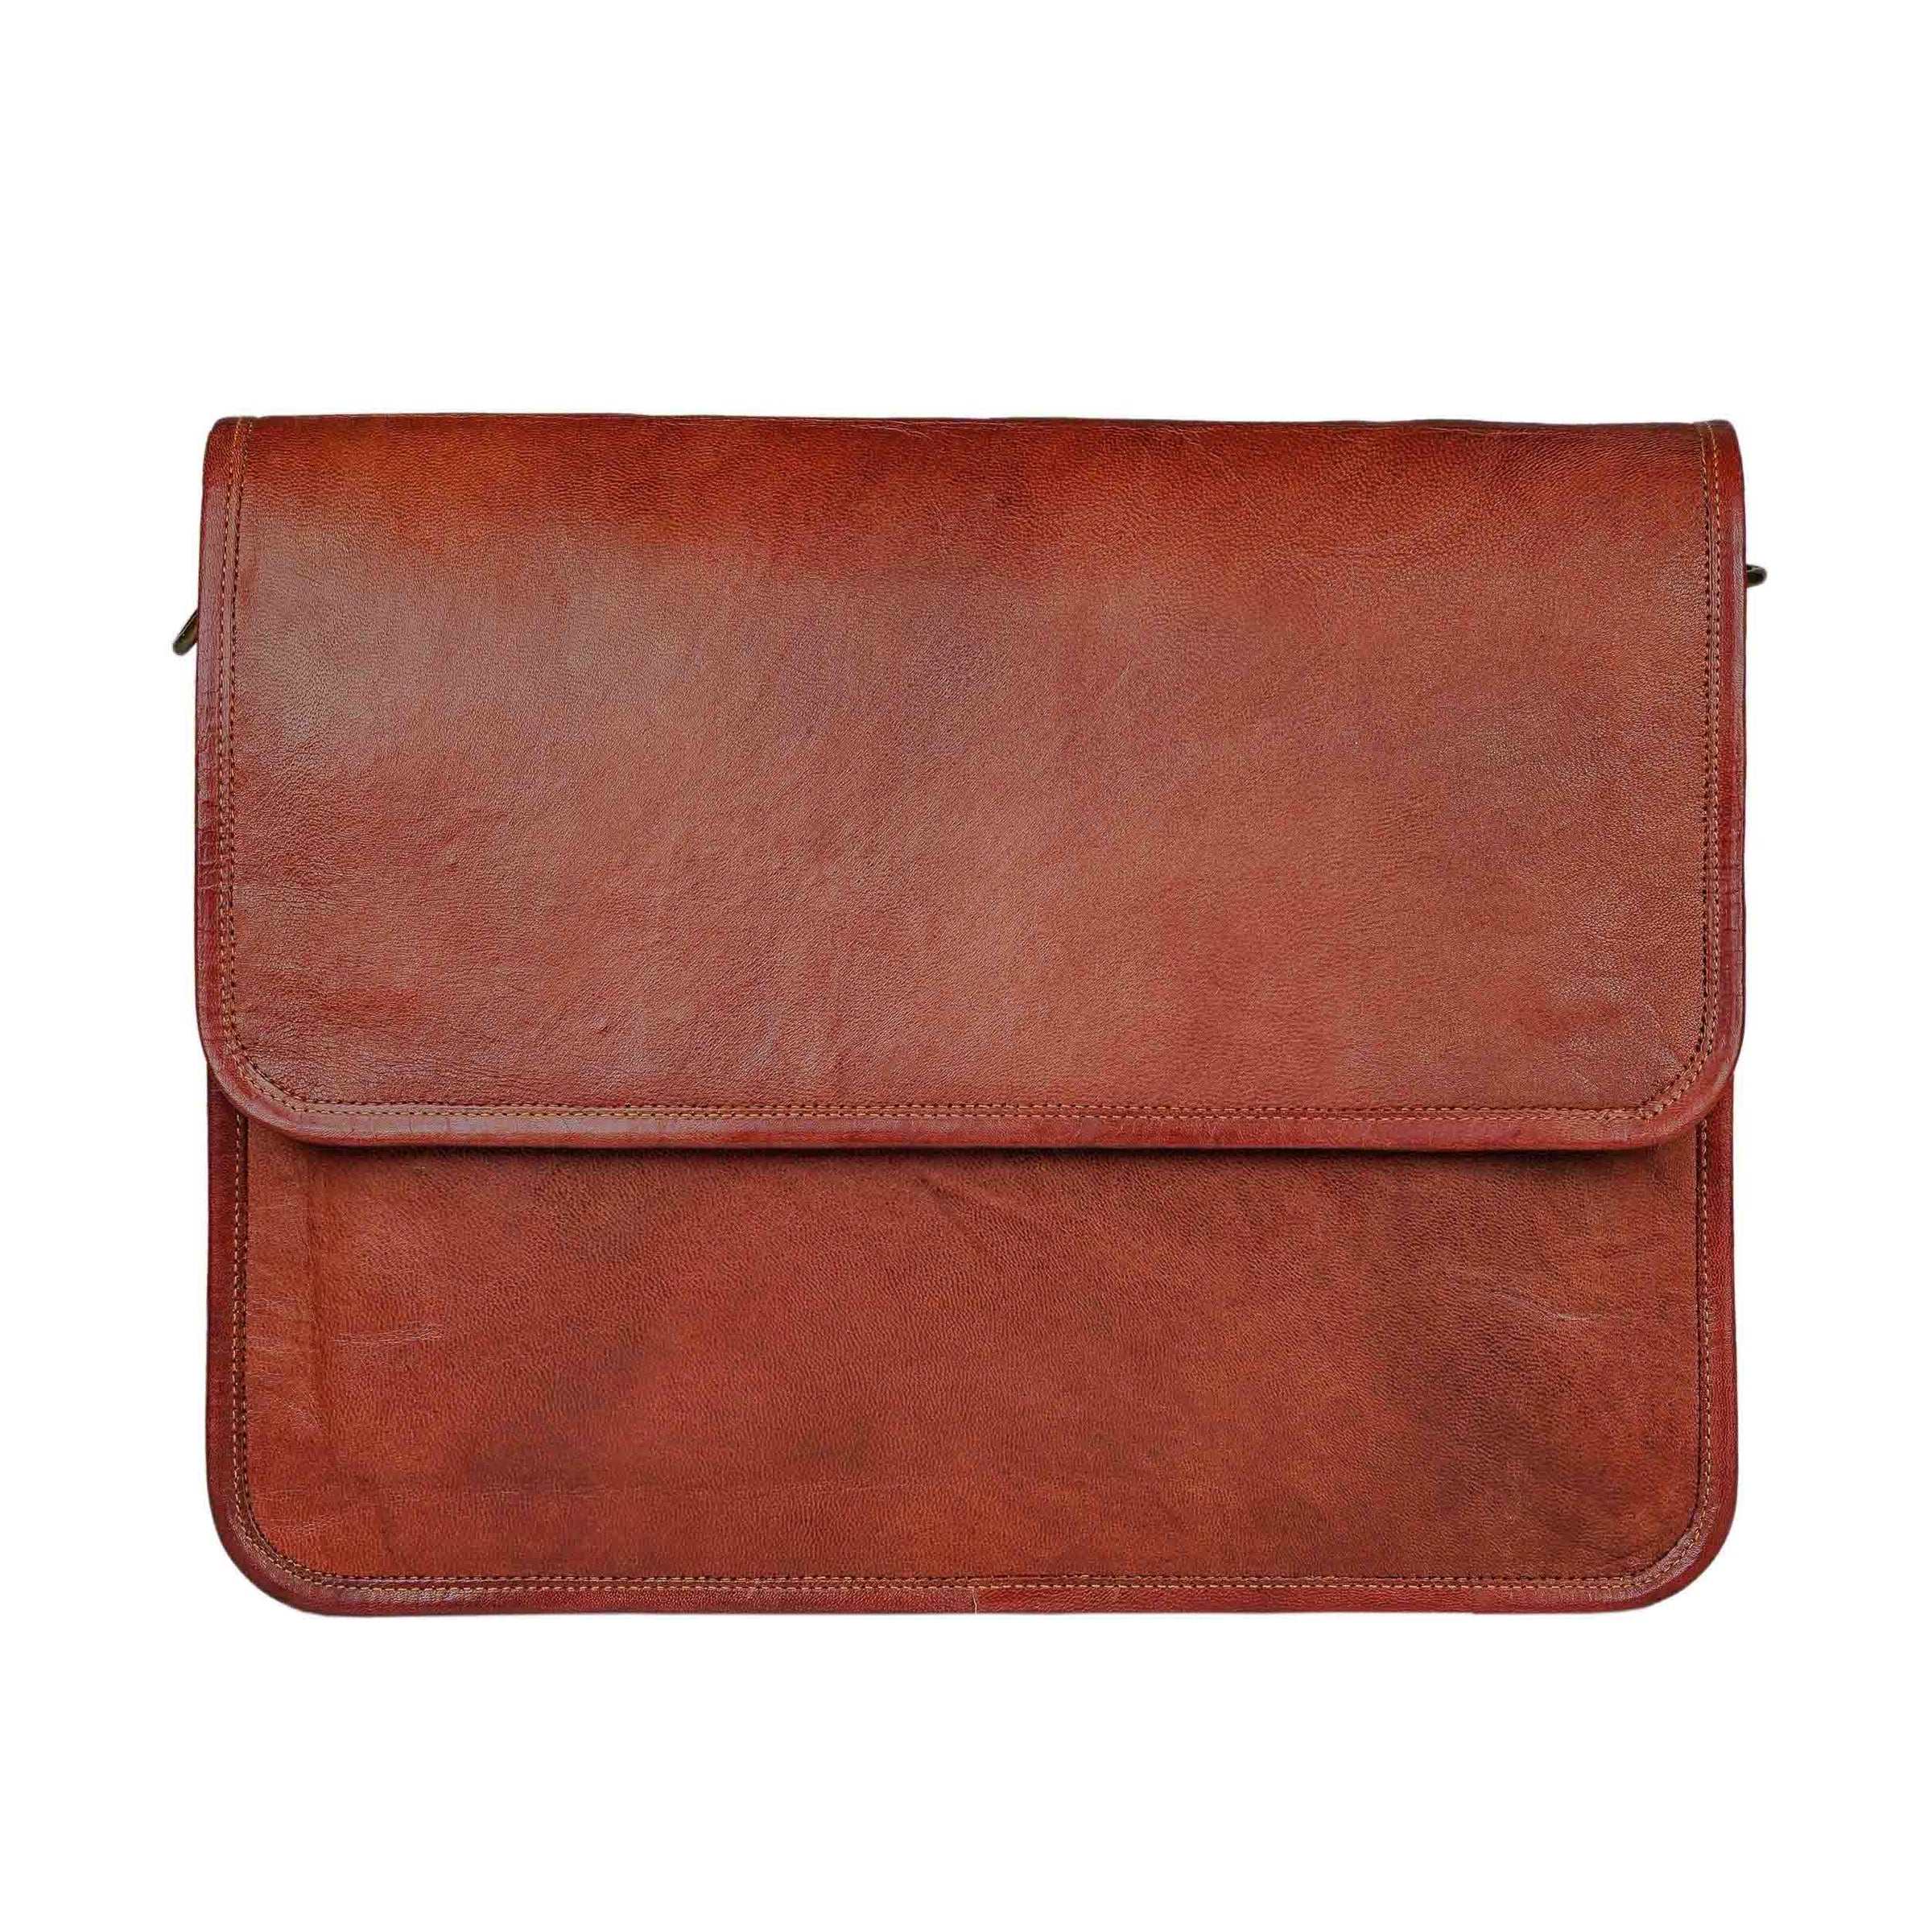 brown coloured messenger bag without external pockets